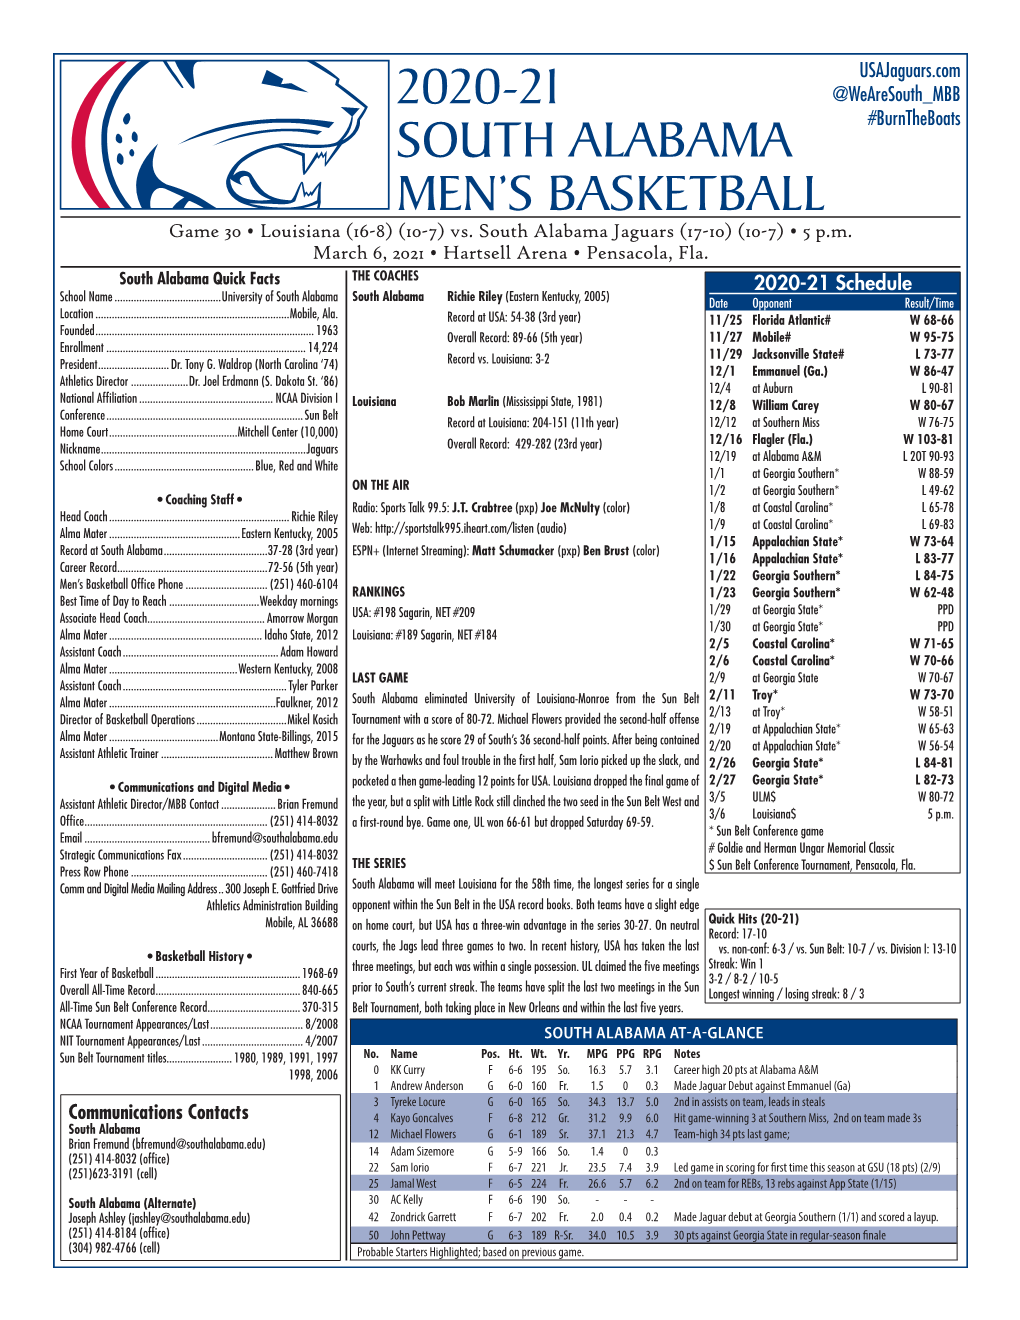 2020-21 South Alabama Men's Basketball